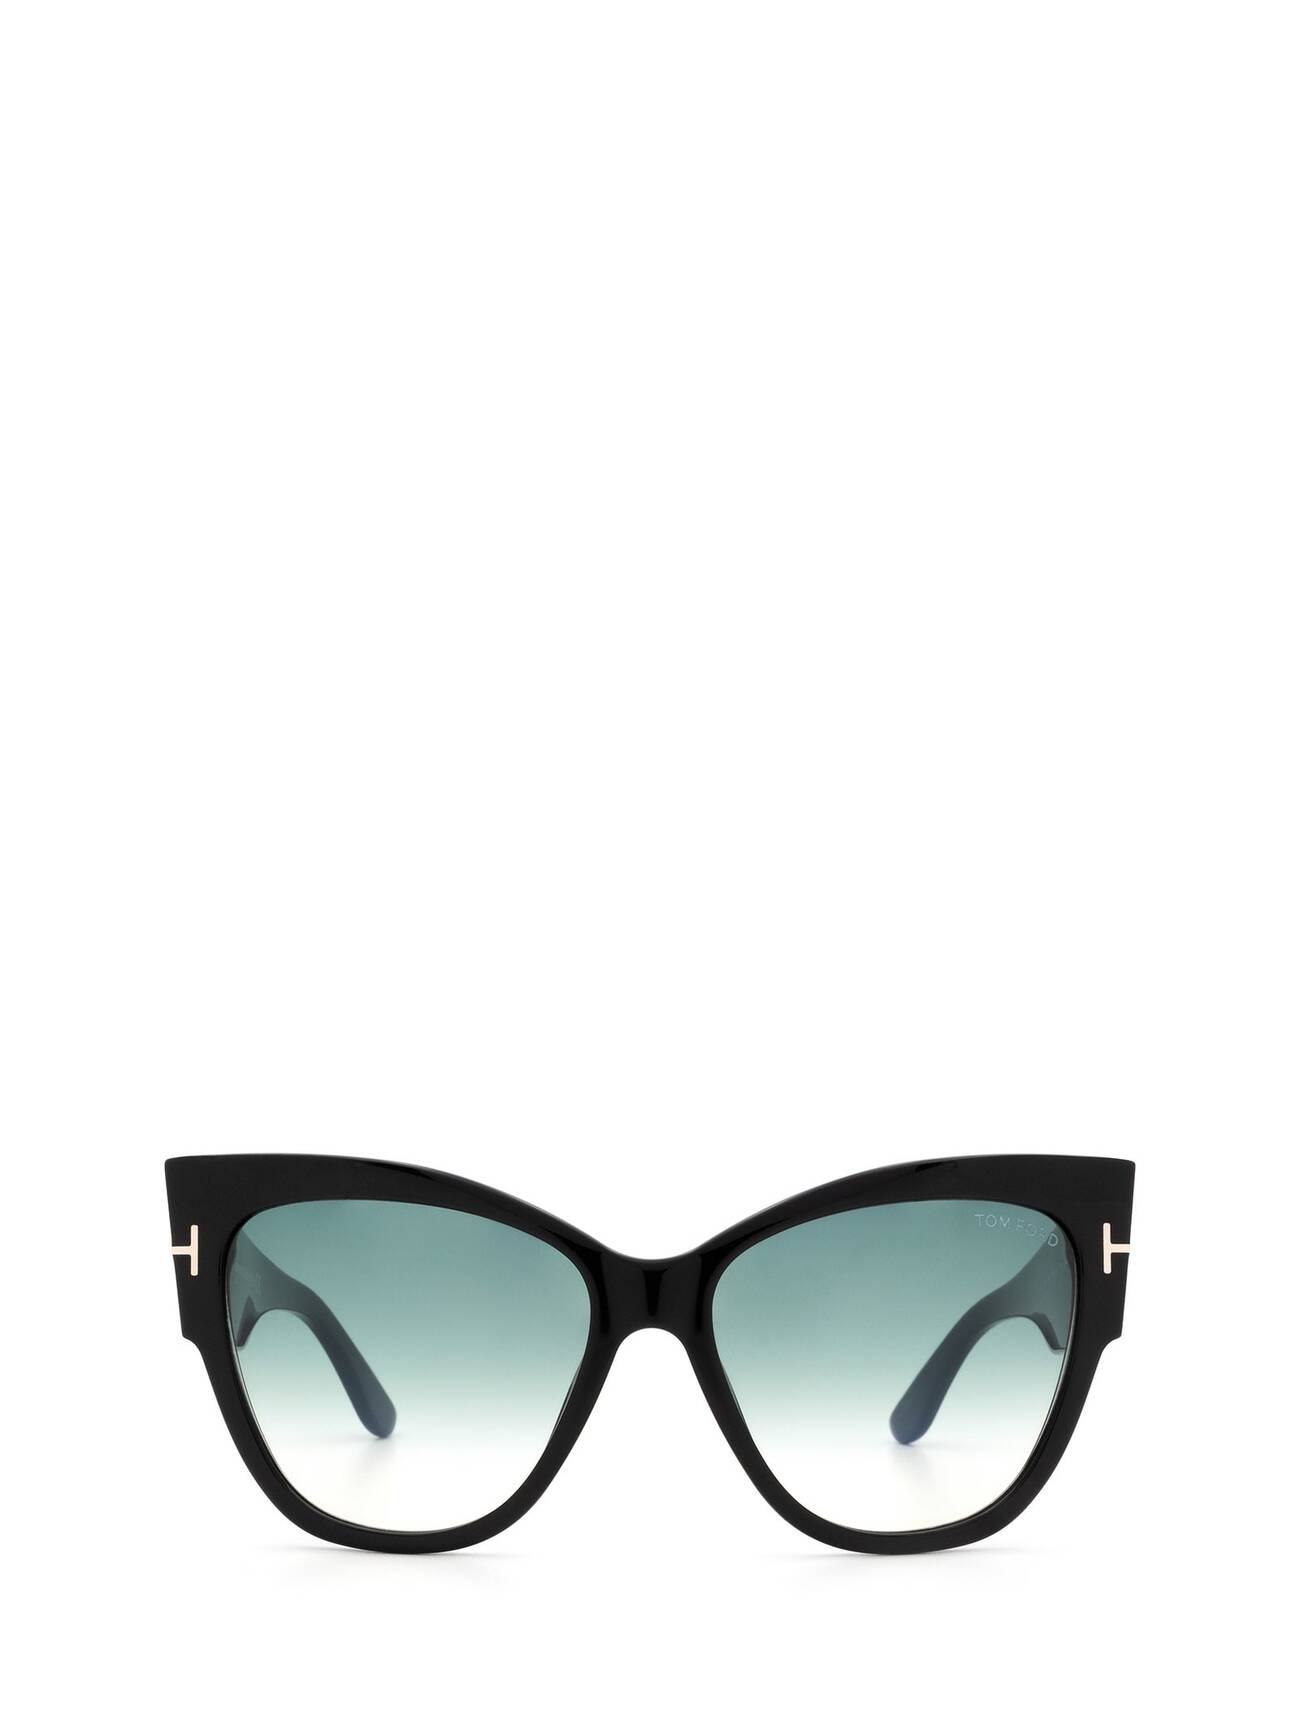 Tom Ford Eyewear Ft0371 Shiny Black Sunglasses